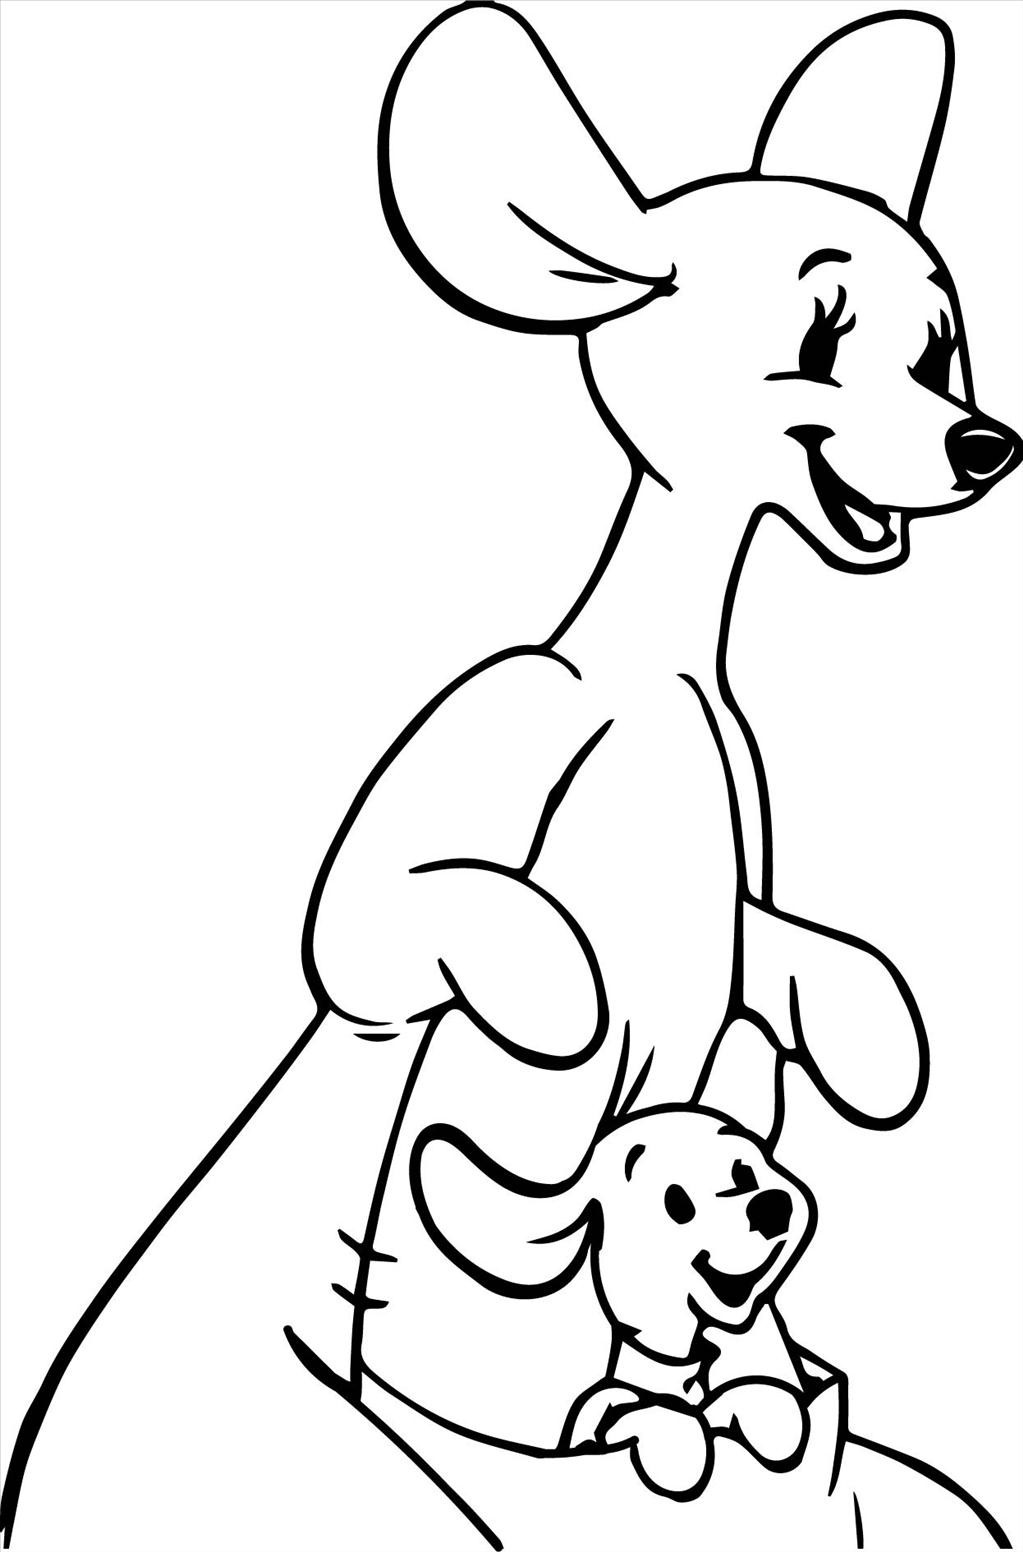 Kangaroo Coloring Pages For Kids at Free printable